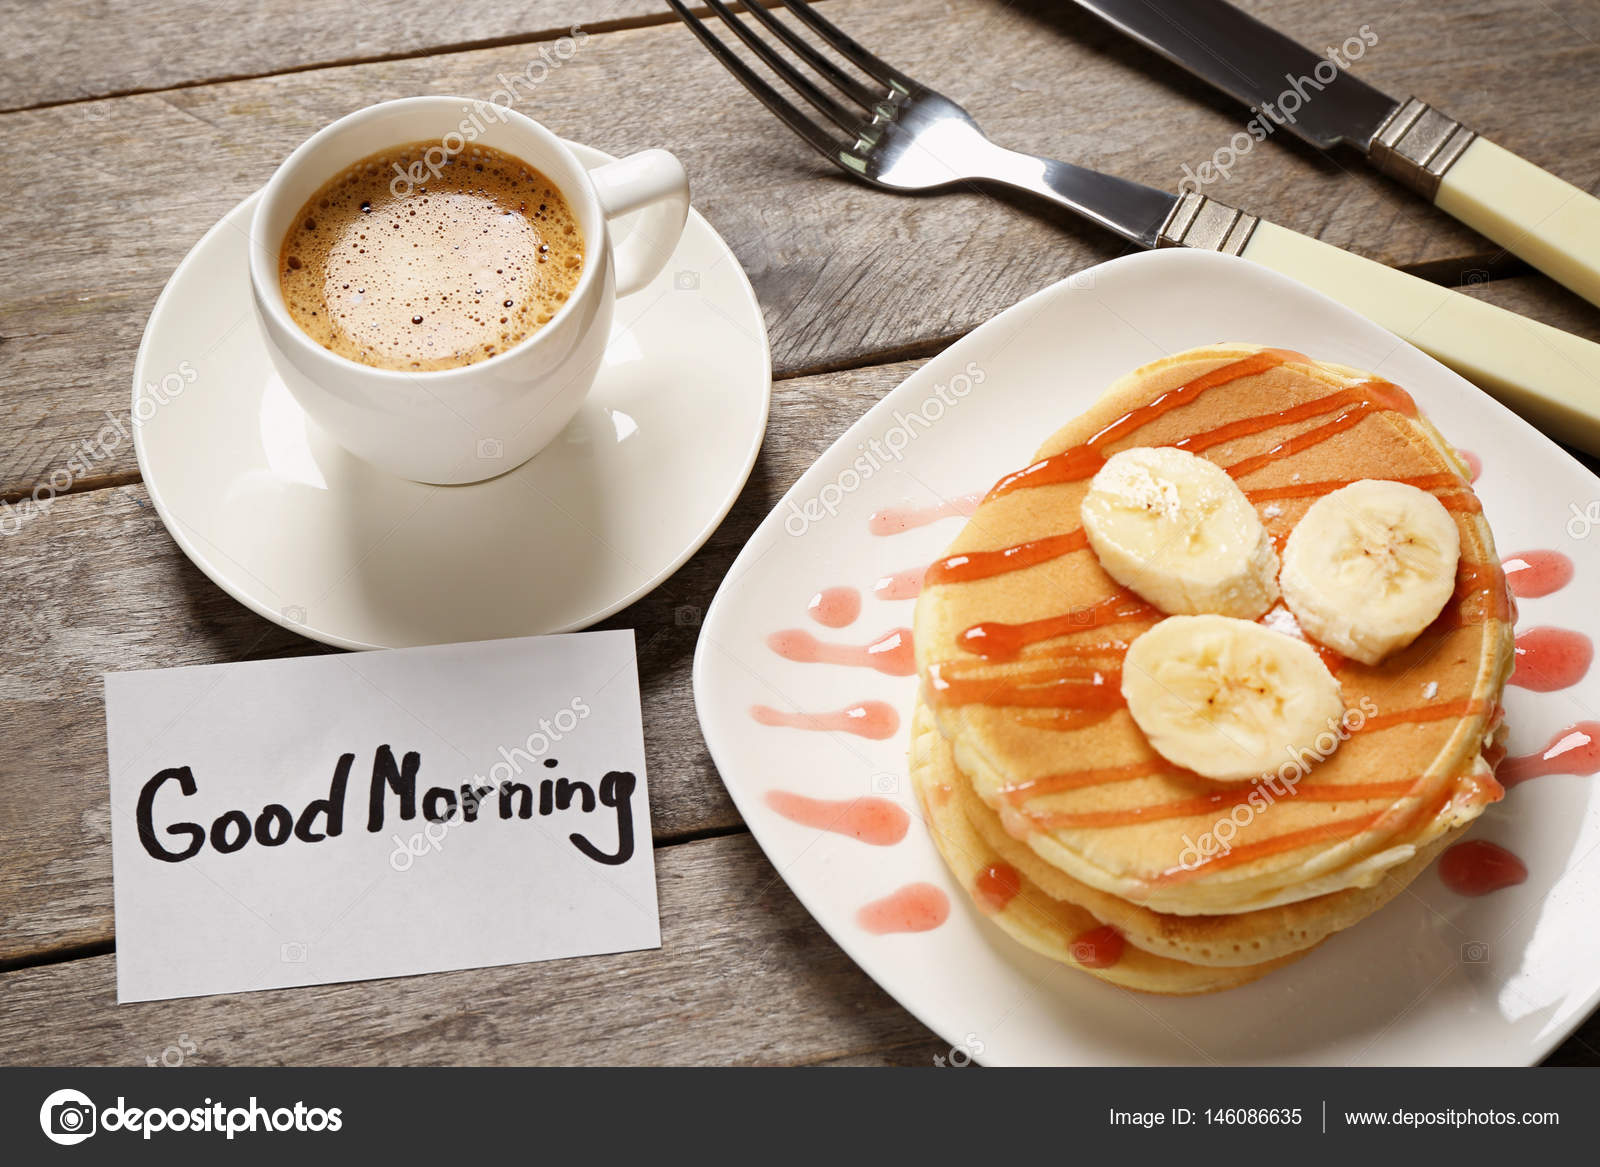 Jodifluckiger: Wwwgood Morning Breakfast Imagescom